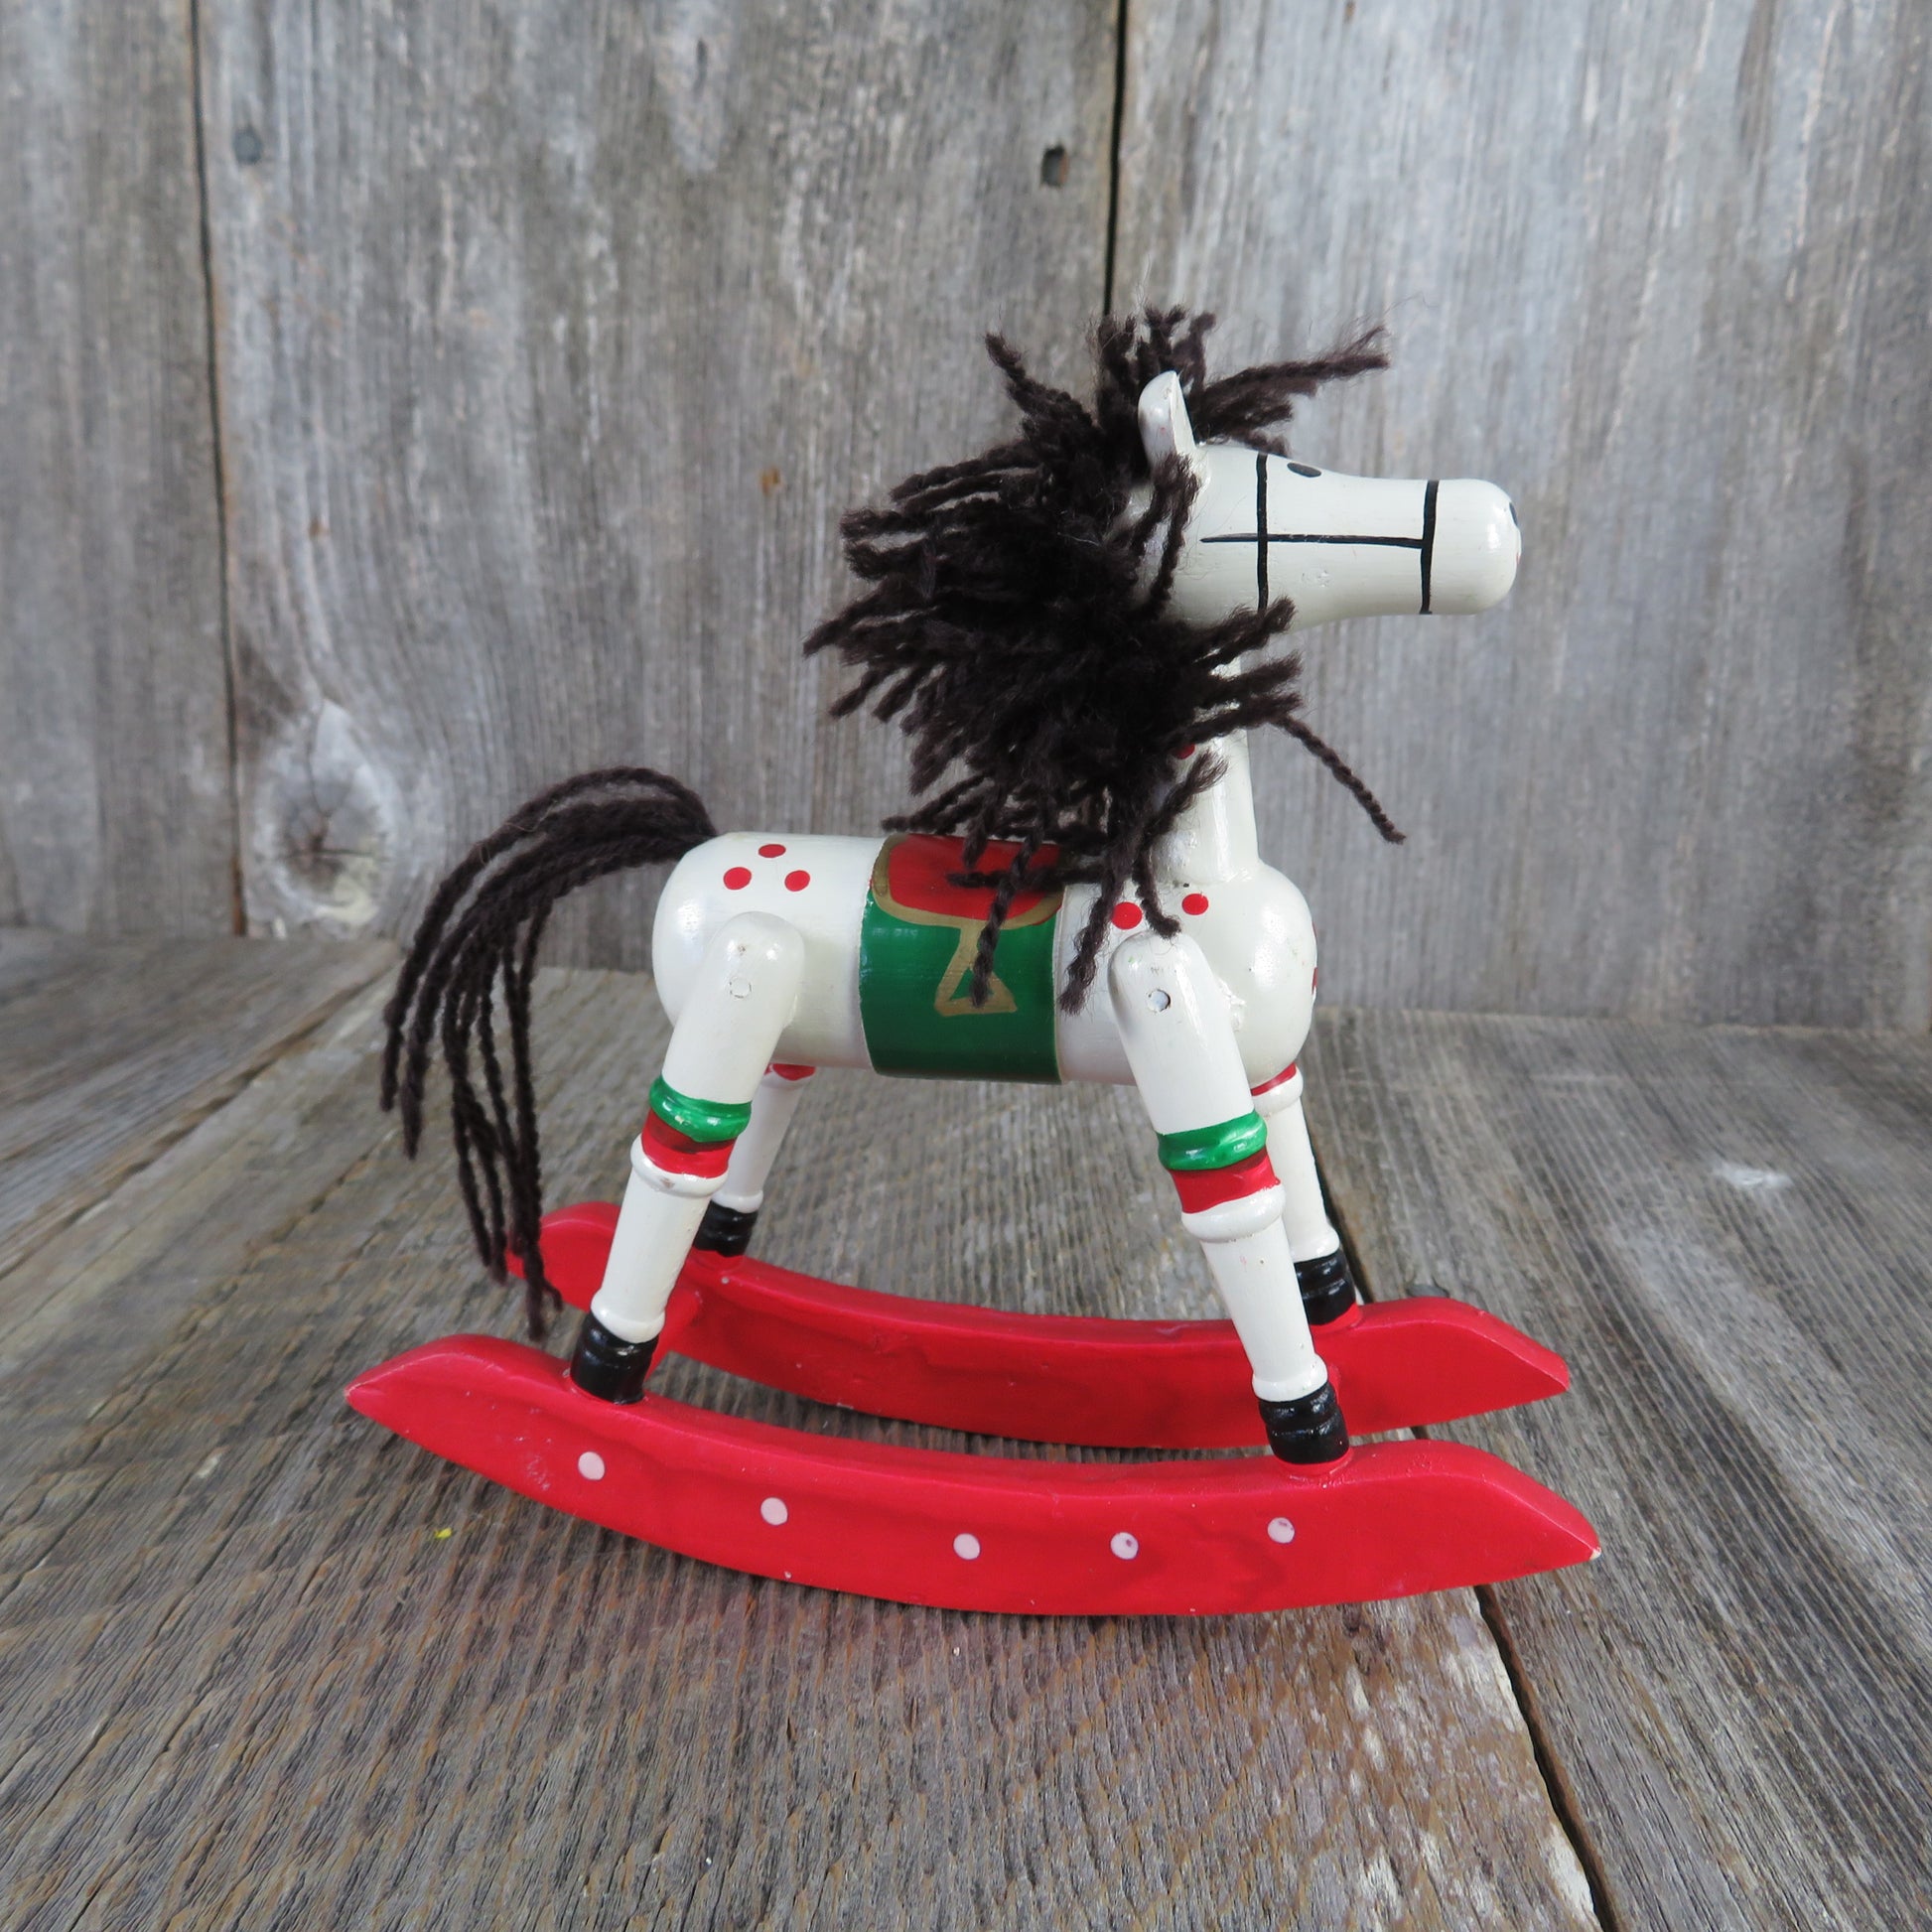 Vintage White Wooden Rocking Horse Pony Figurine Wood Christmas Red Green Saddle Yarn Mane - At Grandma's Table